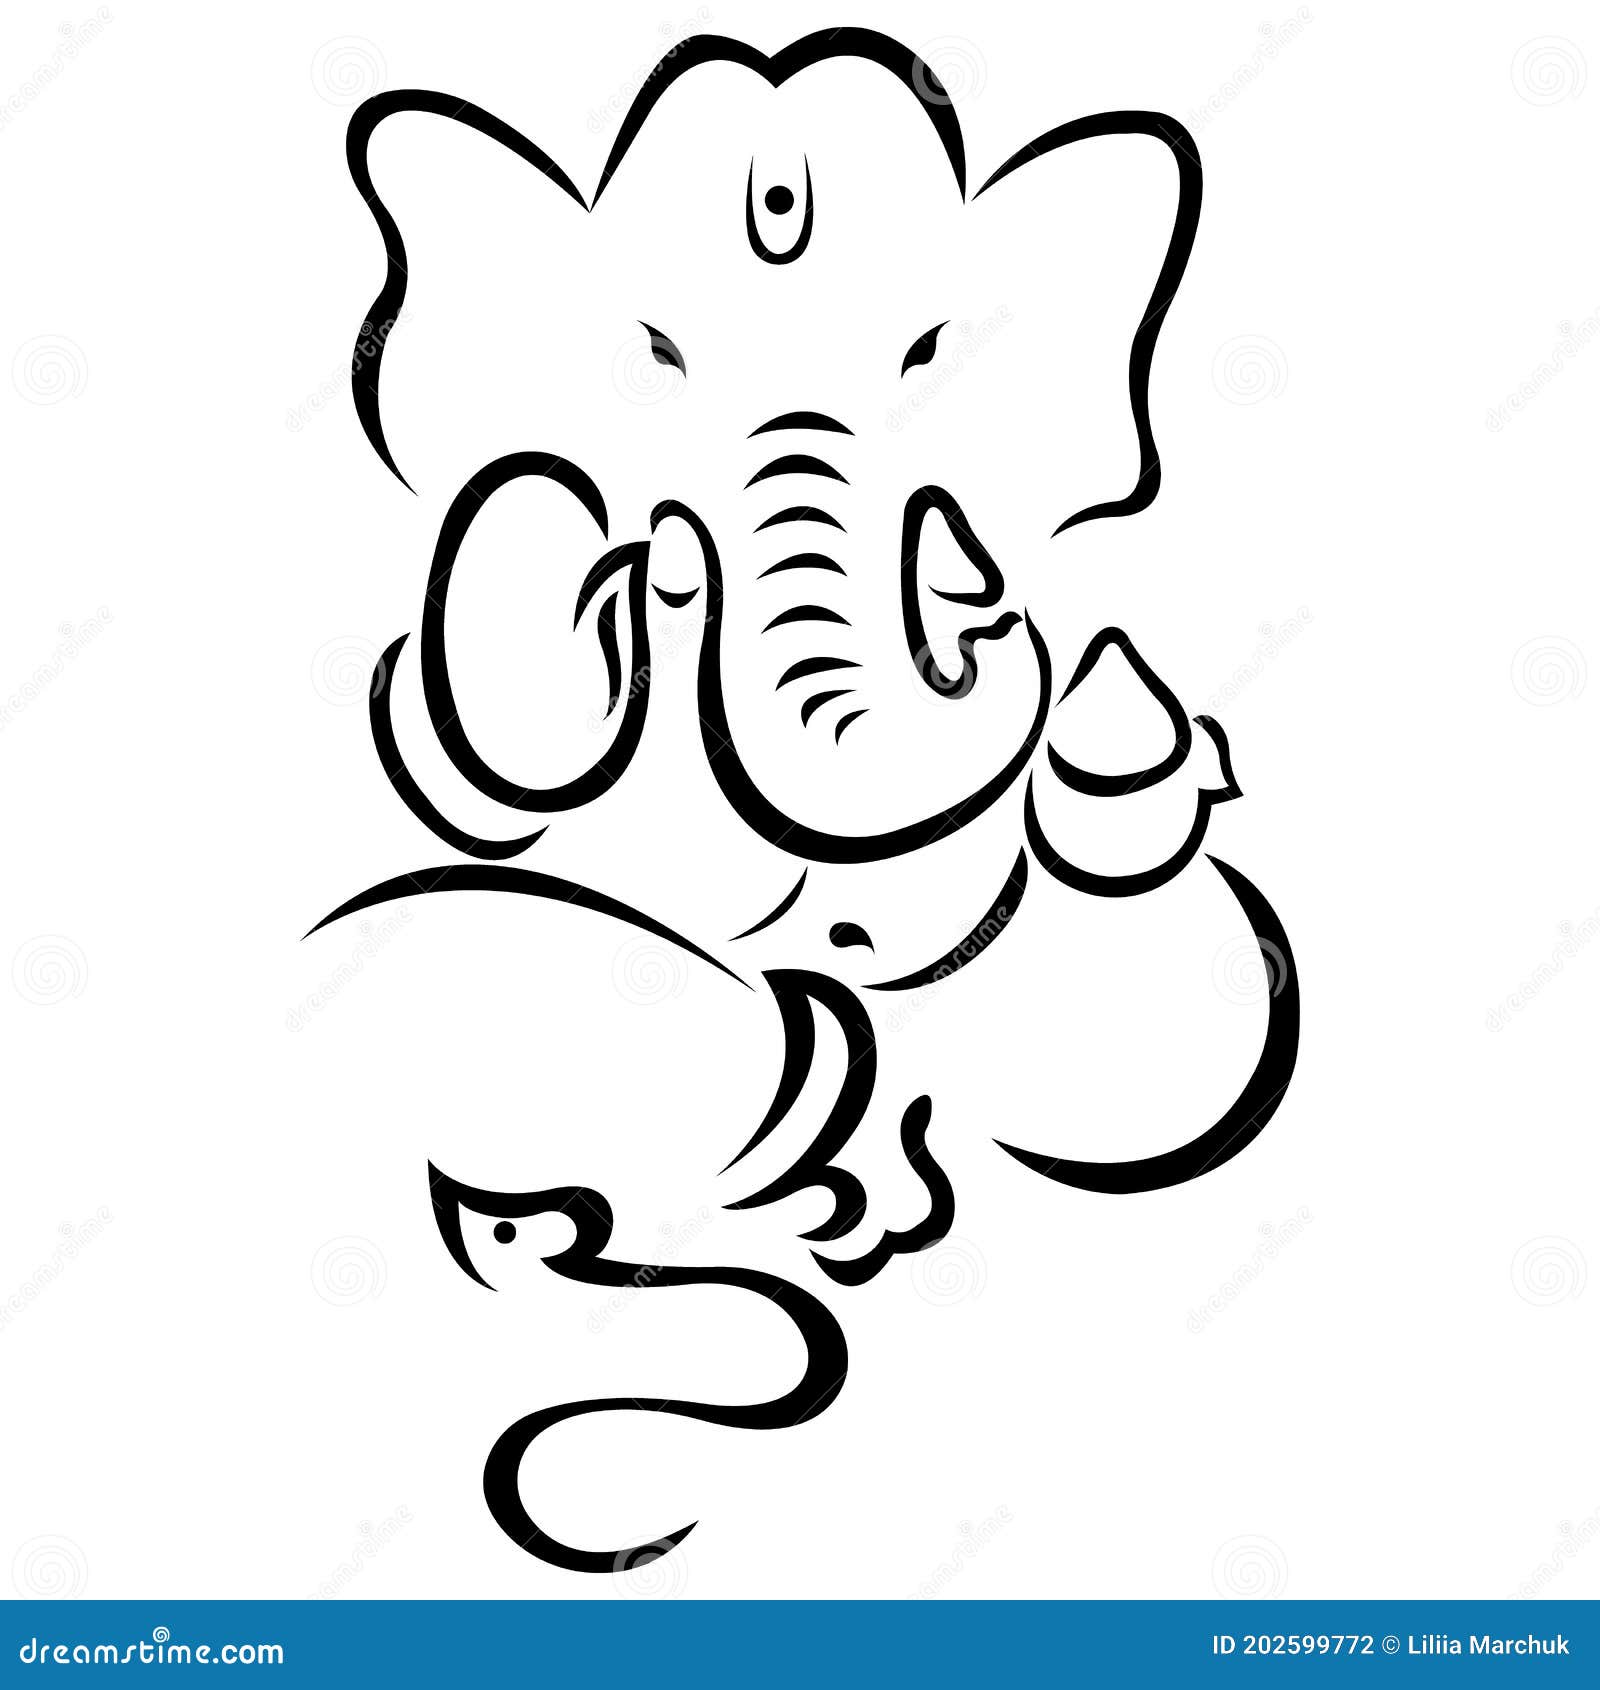 Download Ganesh Black And White Smoke Art Wallpaper | Wallpapers.com